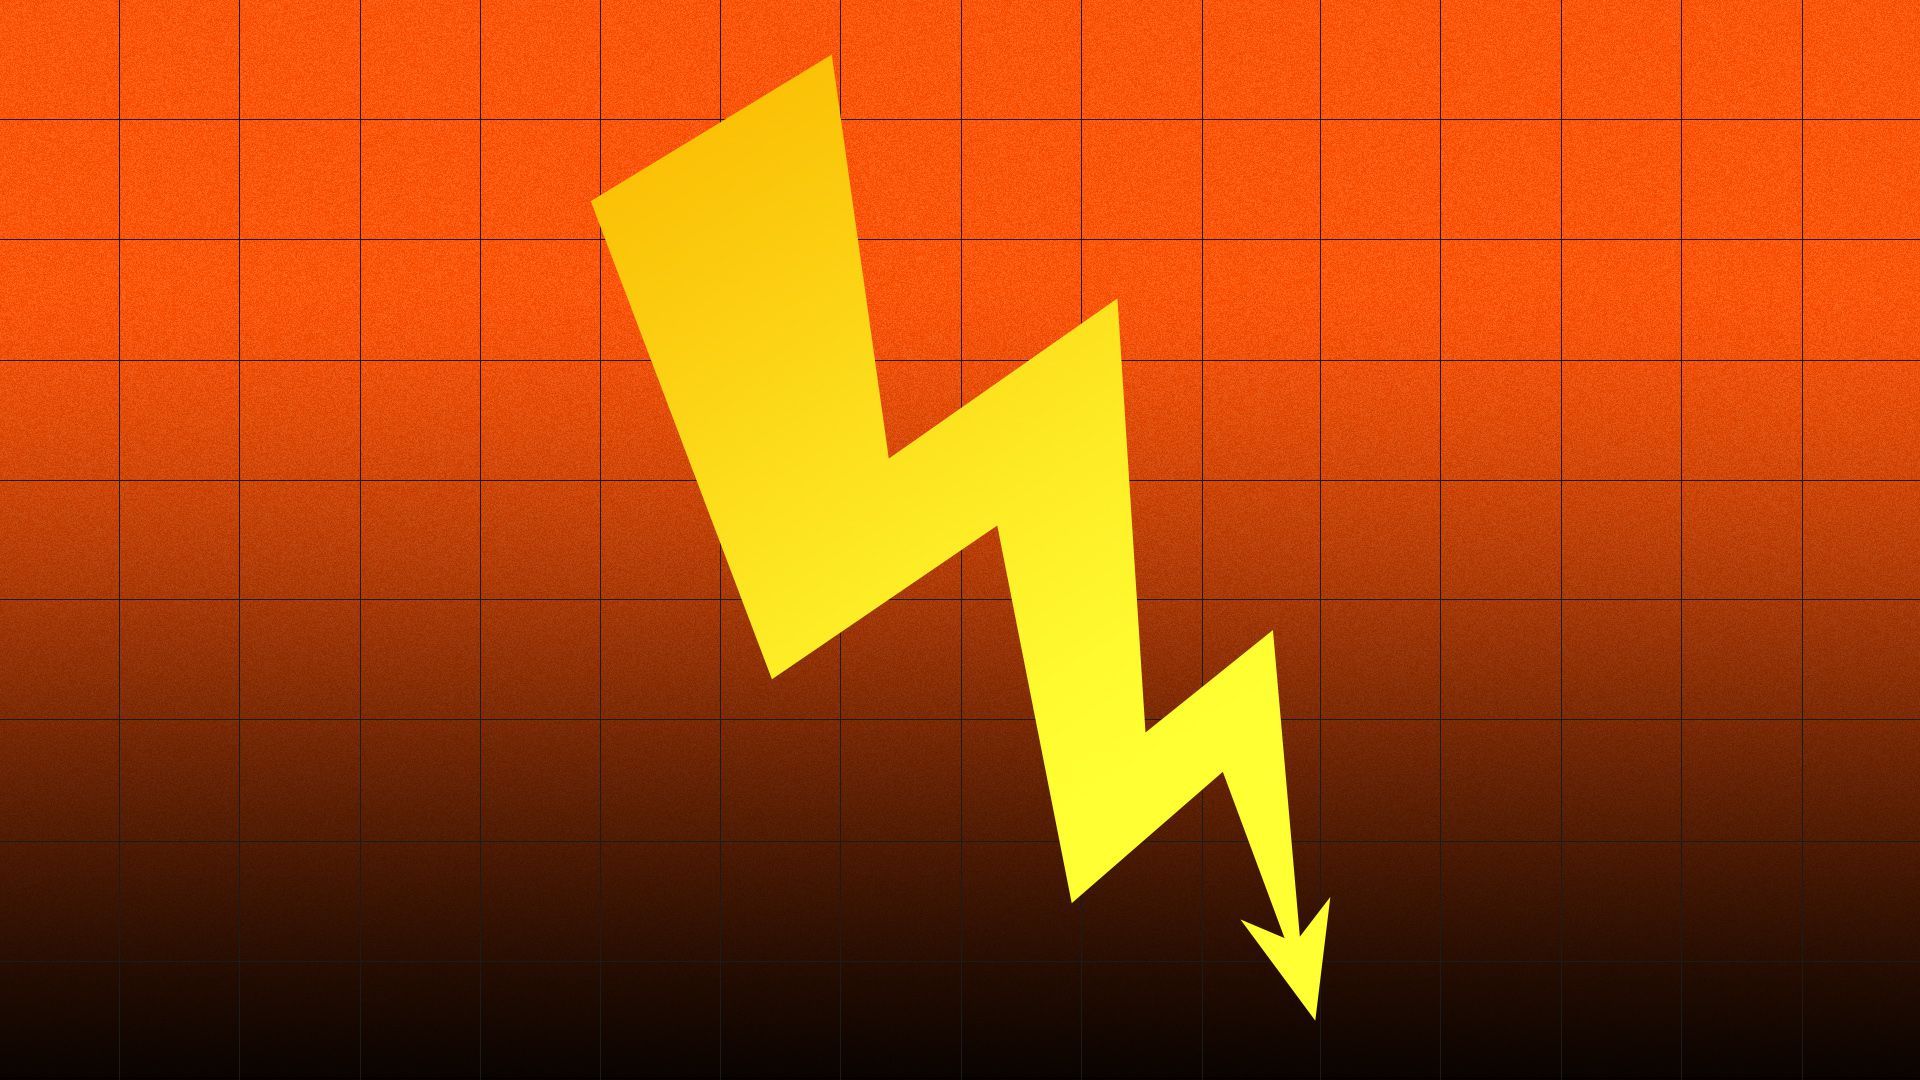 Illustration of a lightning bolt turning into a downward trending stock line